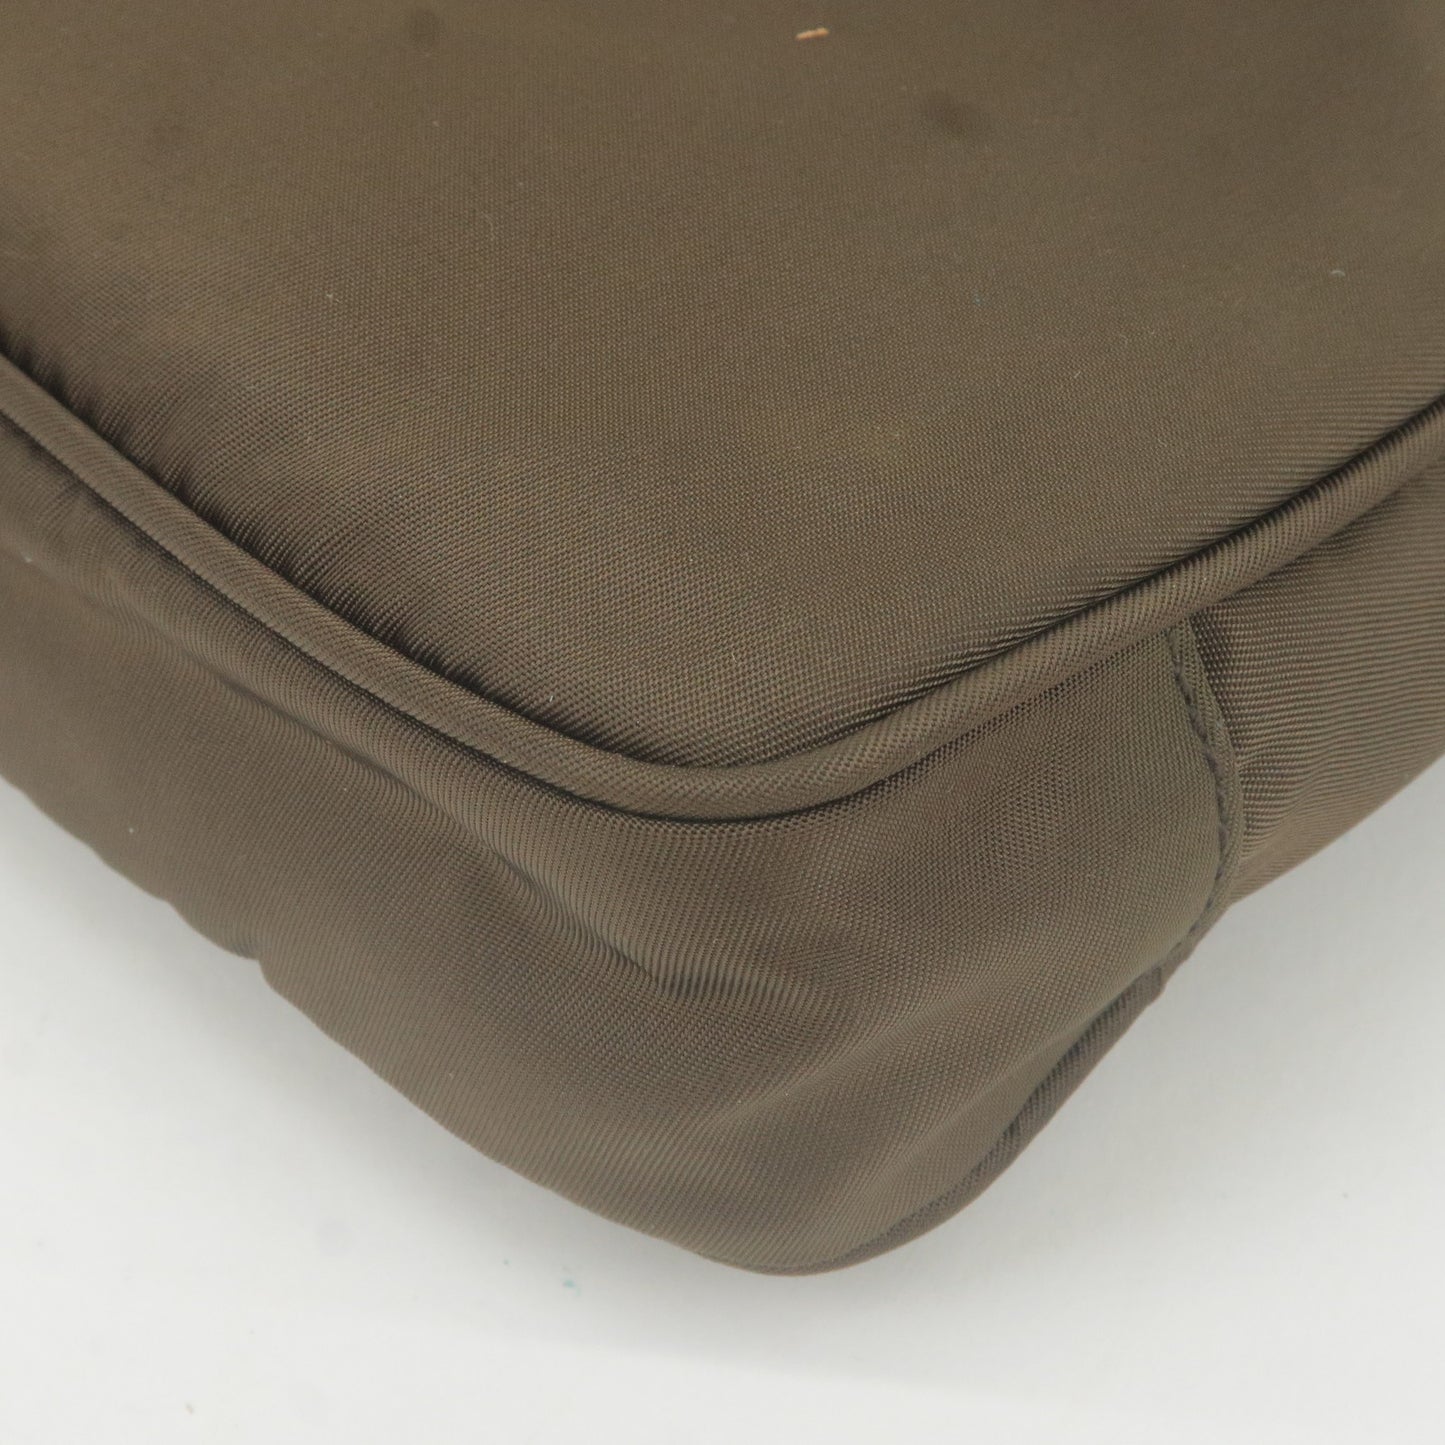 PRADA Logo Nylon Leather Shoulder Bag Purse Khaki BT0693